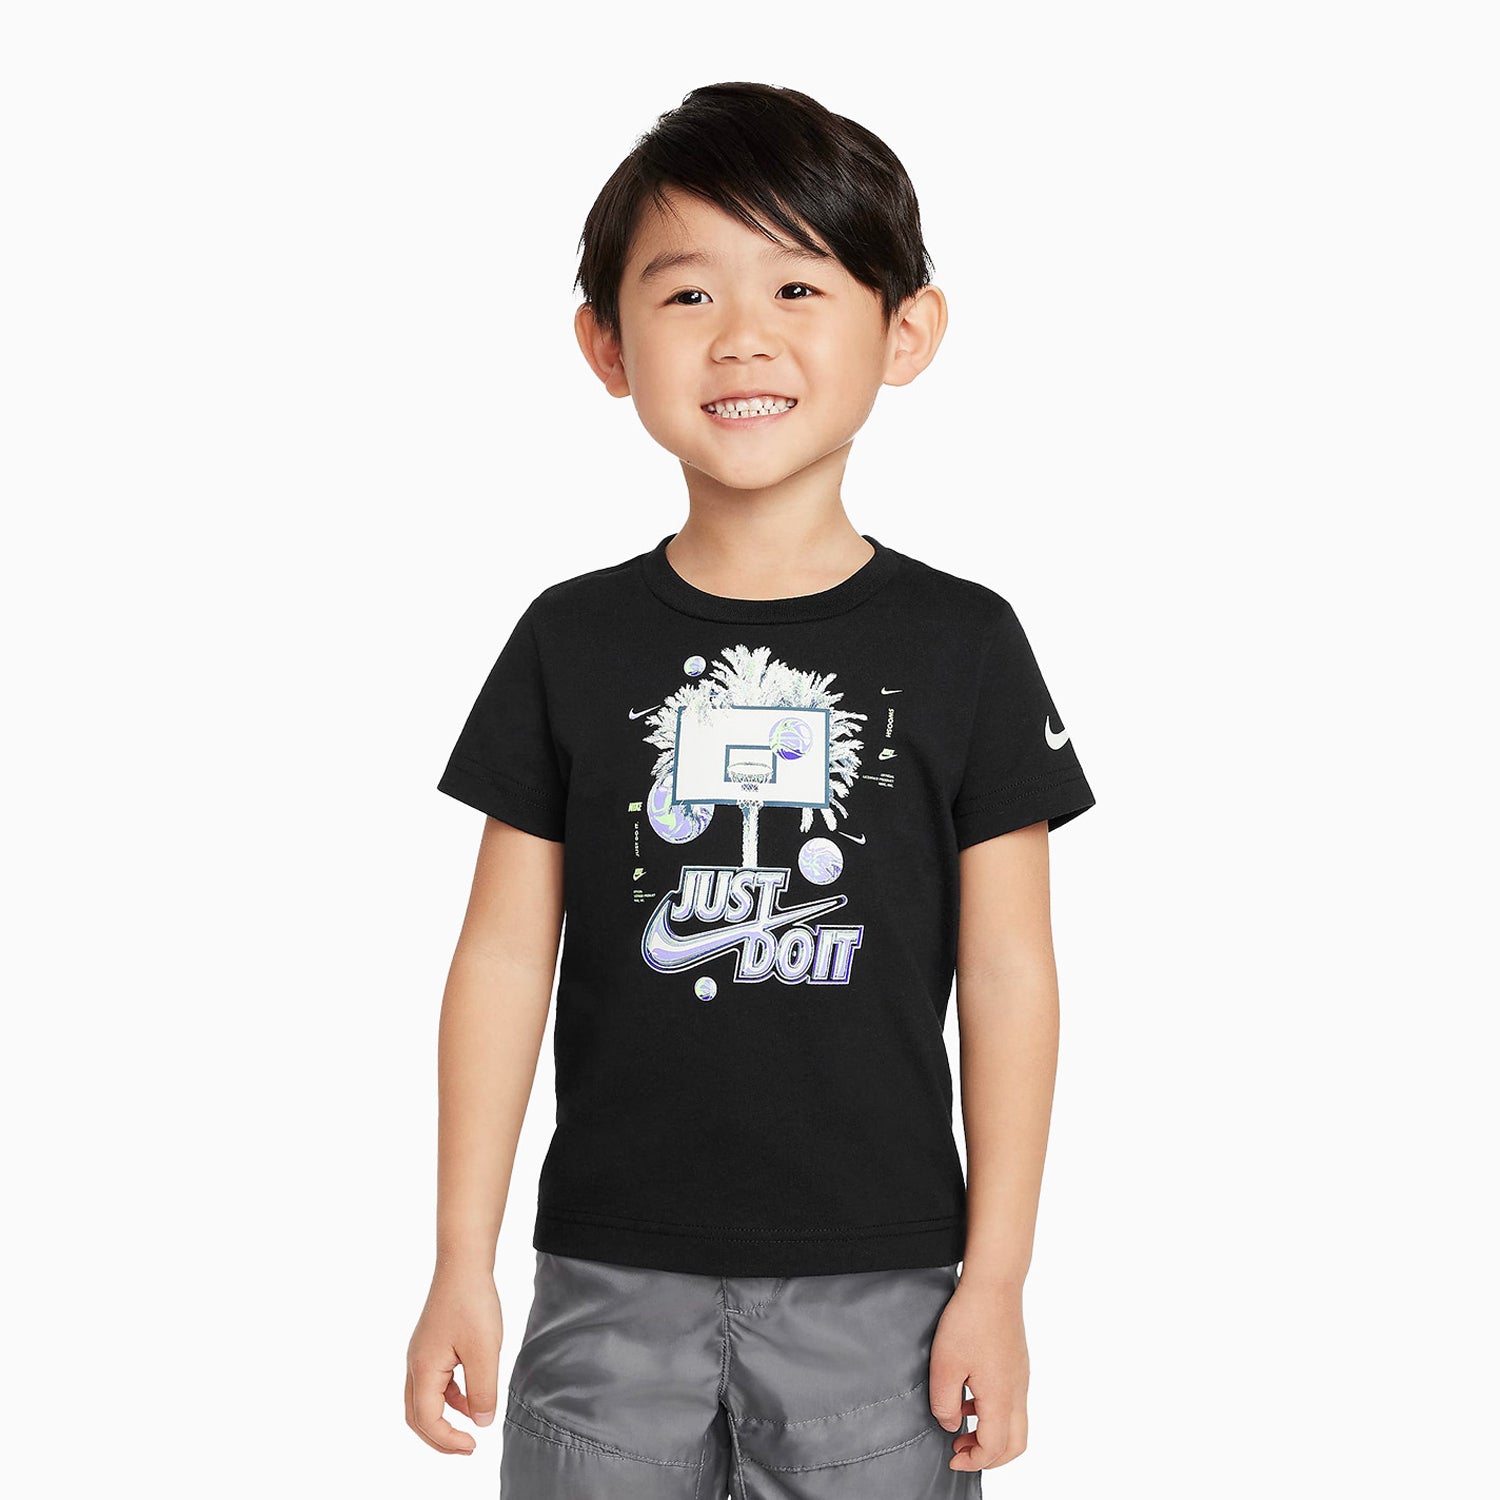 nike-kids-palm-tree-hoop-just-do-it-t-shirt-76m080-023